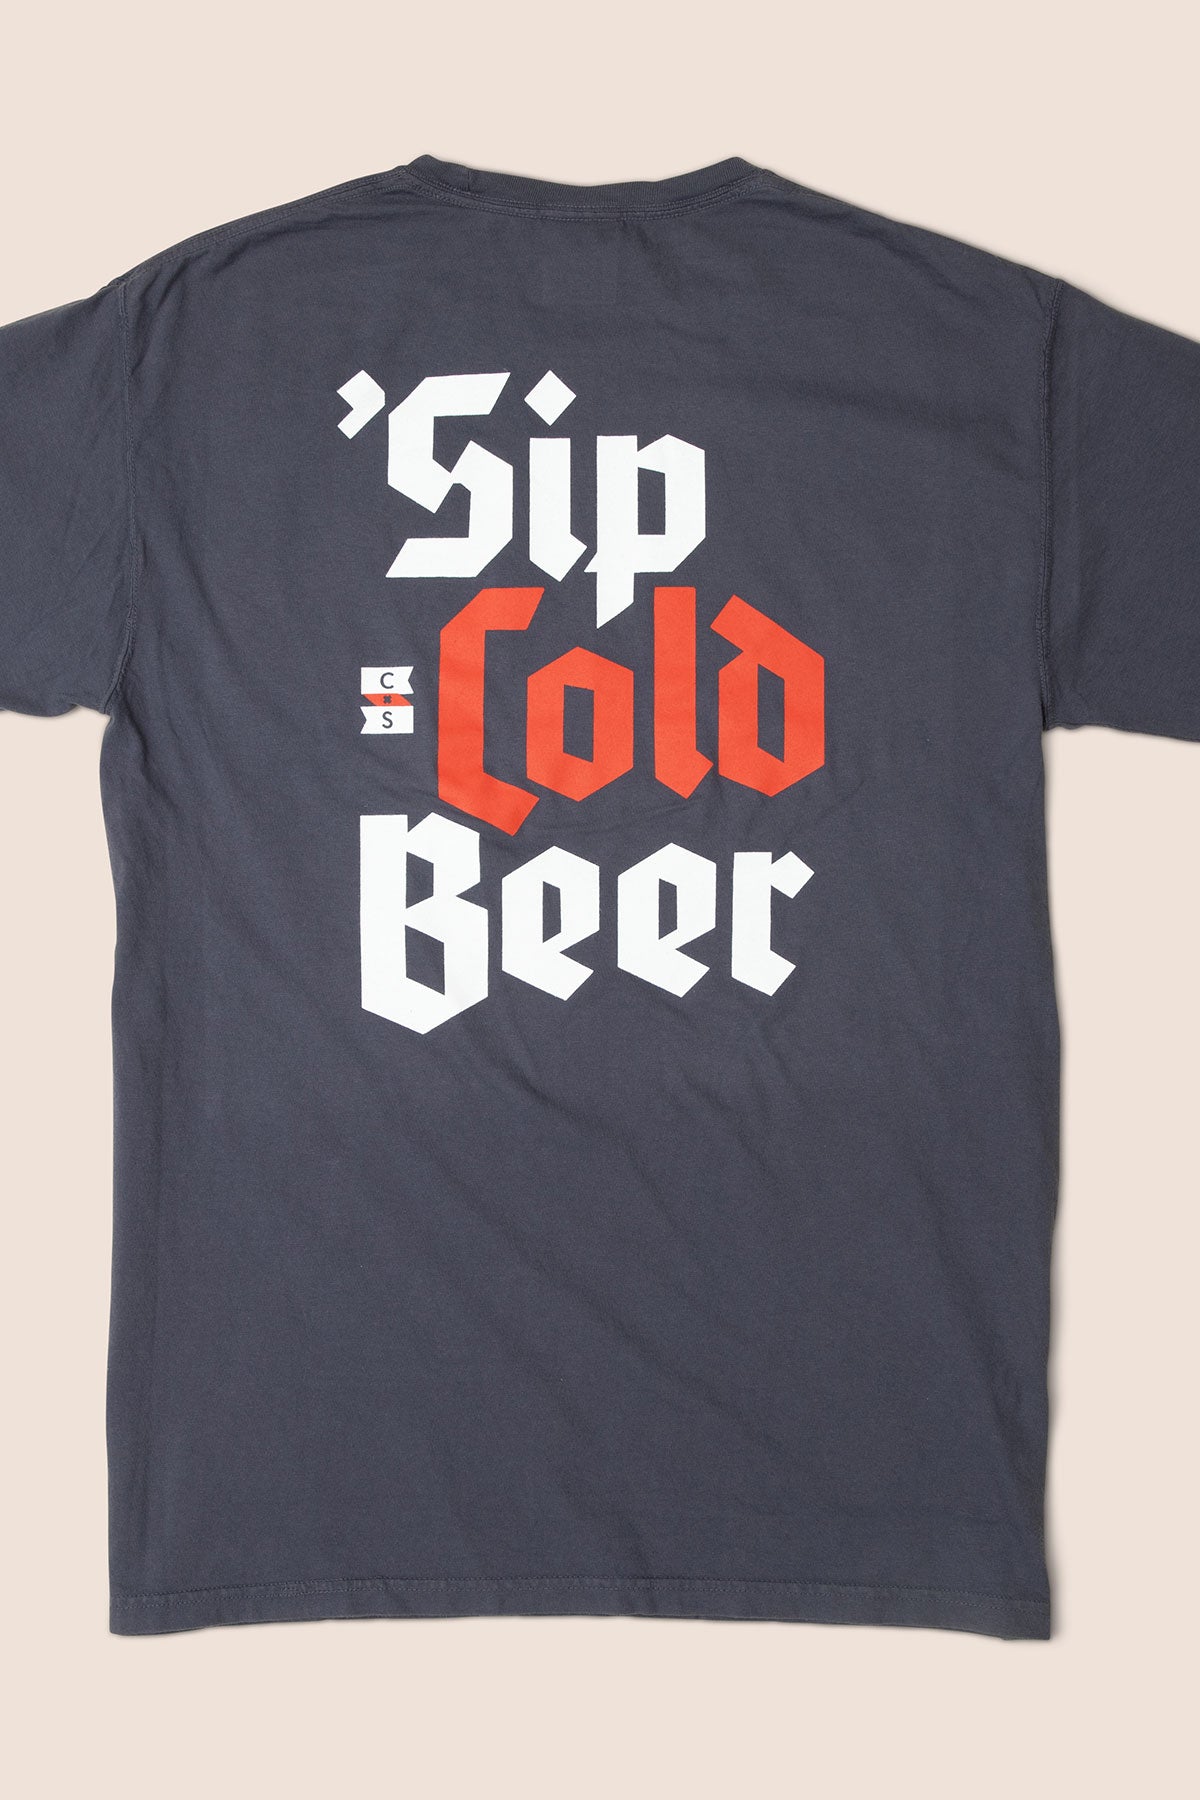 Sip Cold Beer / Navy